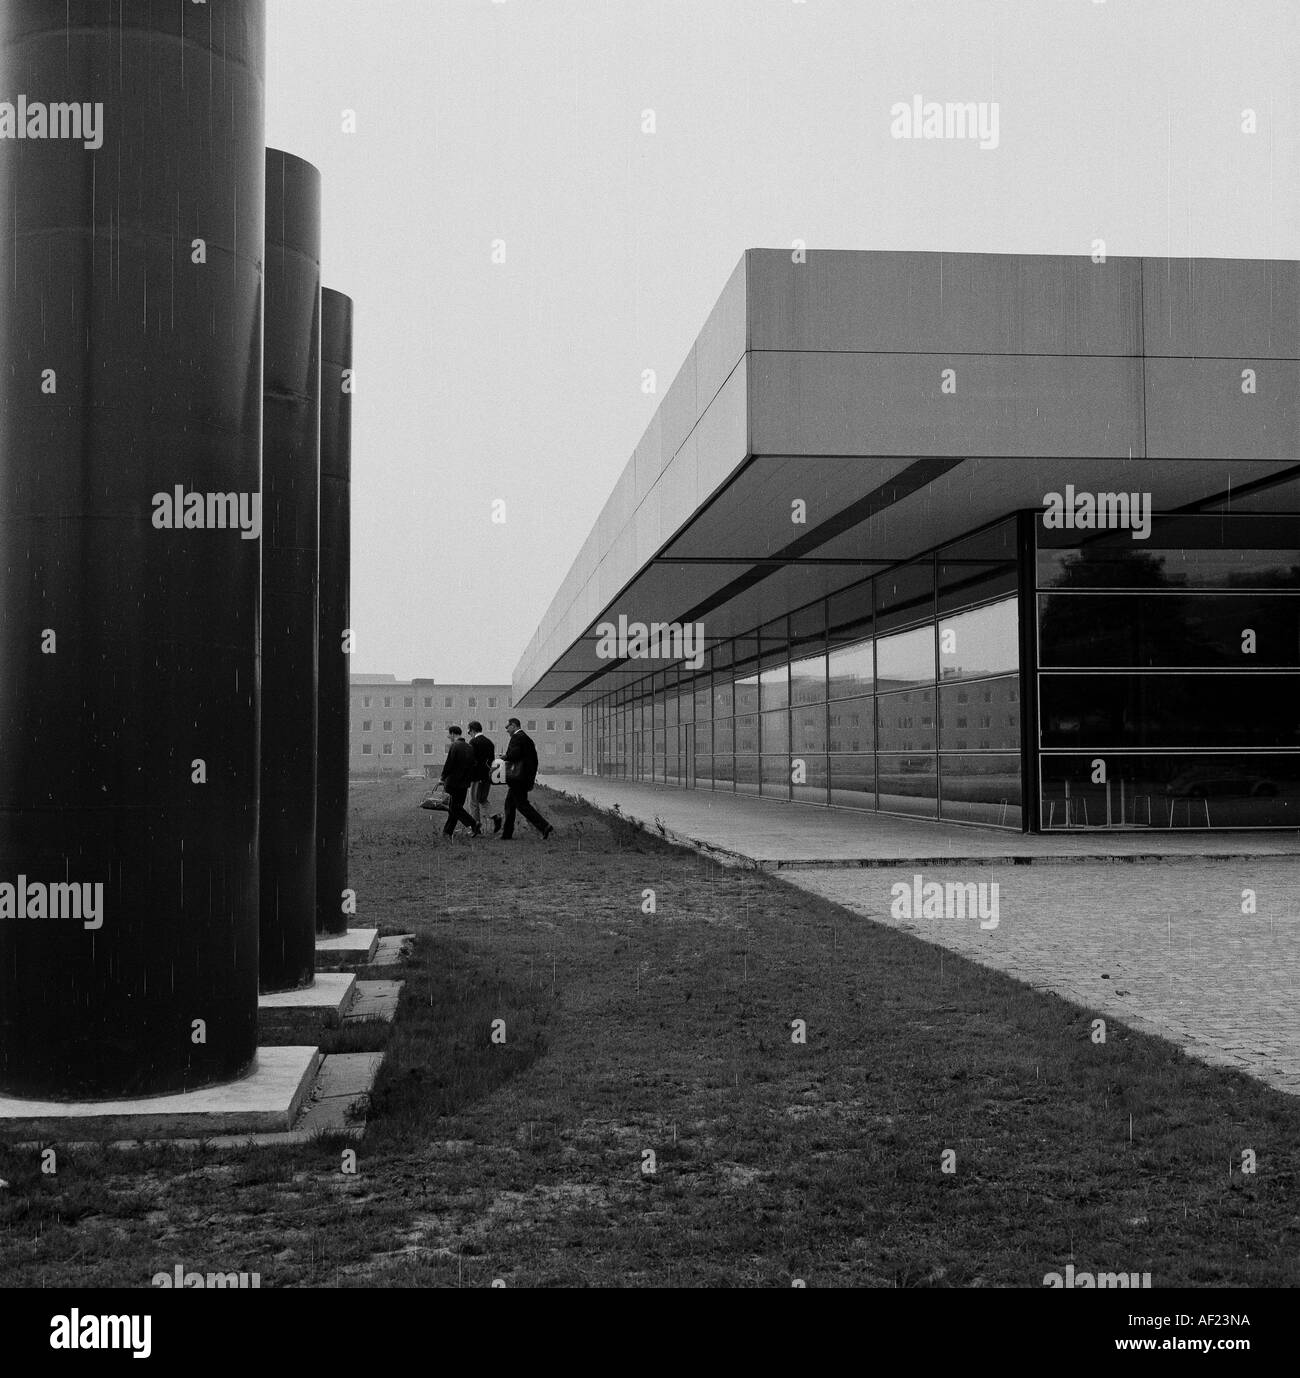 Sports Hall, Landskrona, 1964. Architetto: Arne Jacobsen Foto stock - Alamy